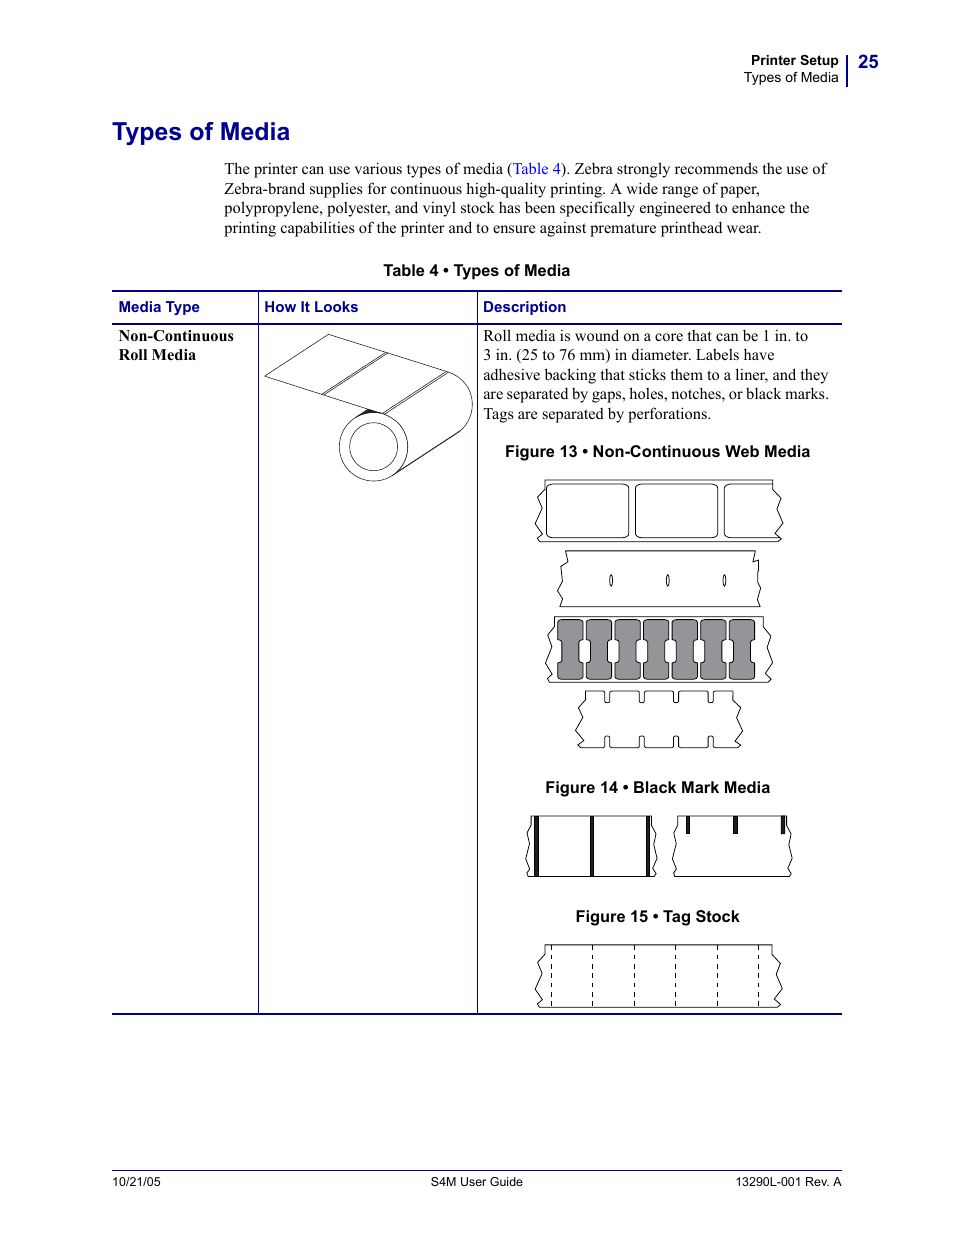 Types of media | Zebra S4M User Manual | Page 31 / 132 | Original mode